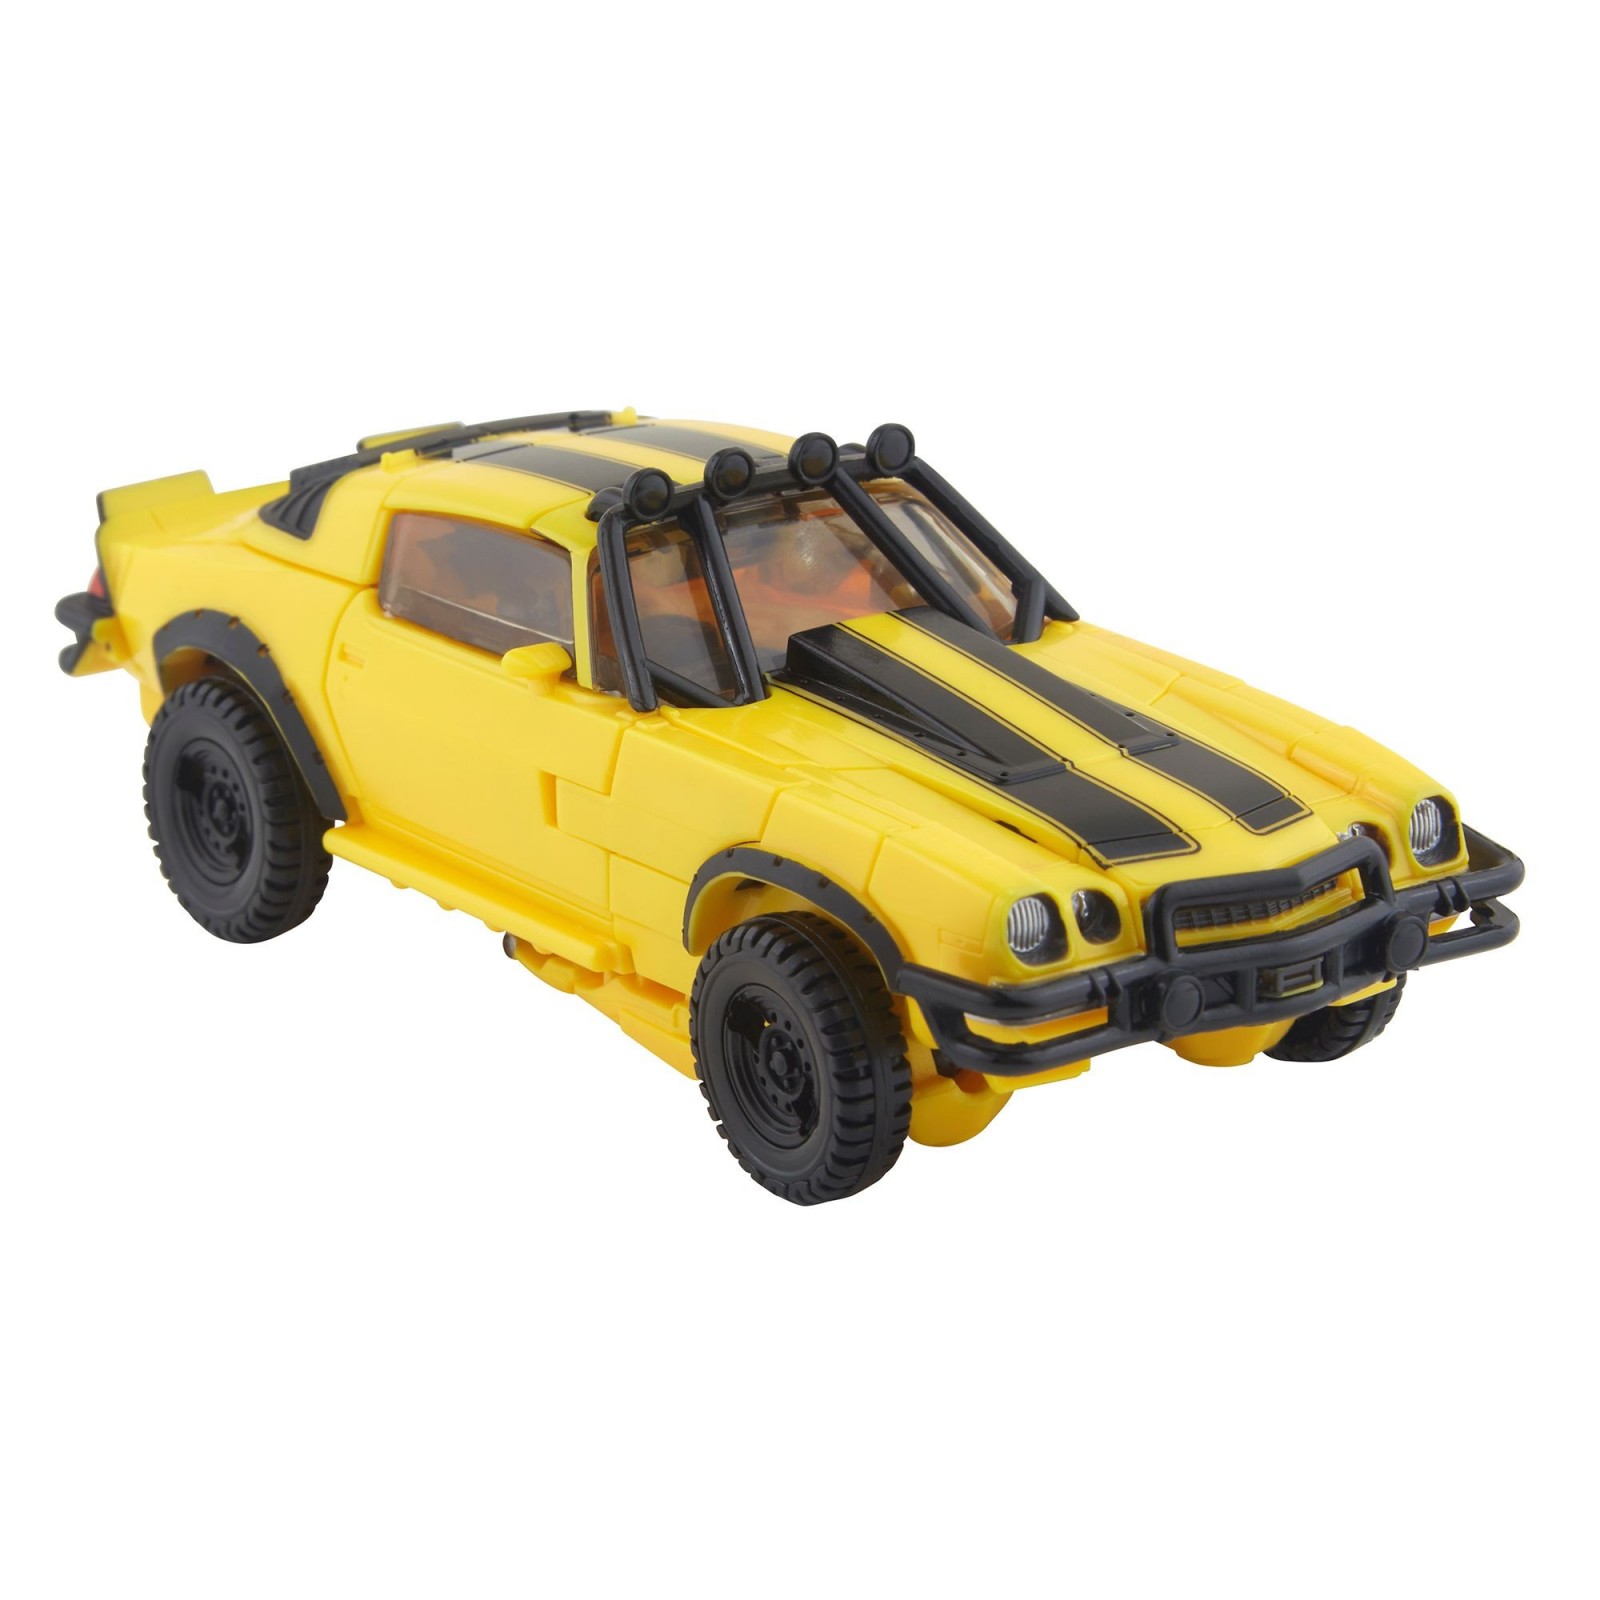 Transformers Movie Big Size Ultimate Bumblebee Camaro Vehicle Car